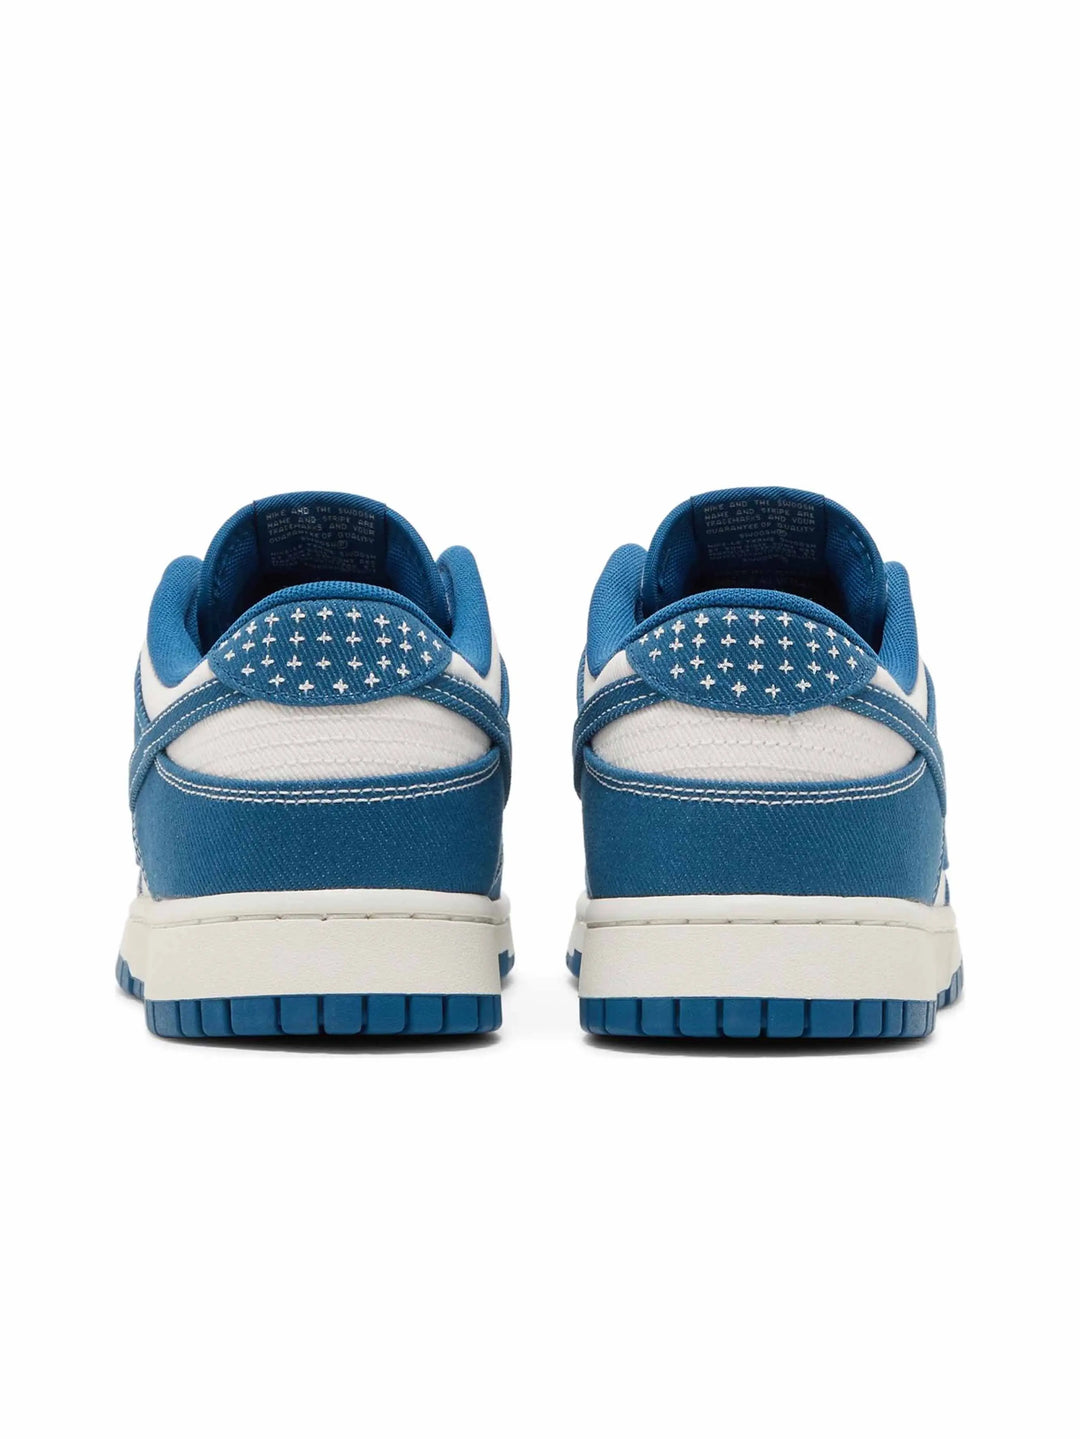 Nike Dunk Low Industrial Blue Sashiko - Prior